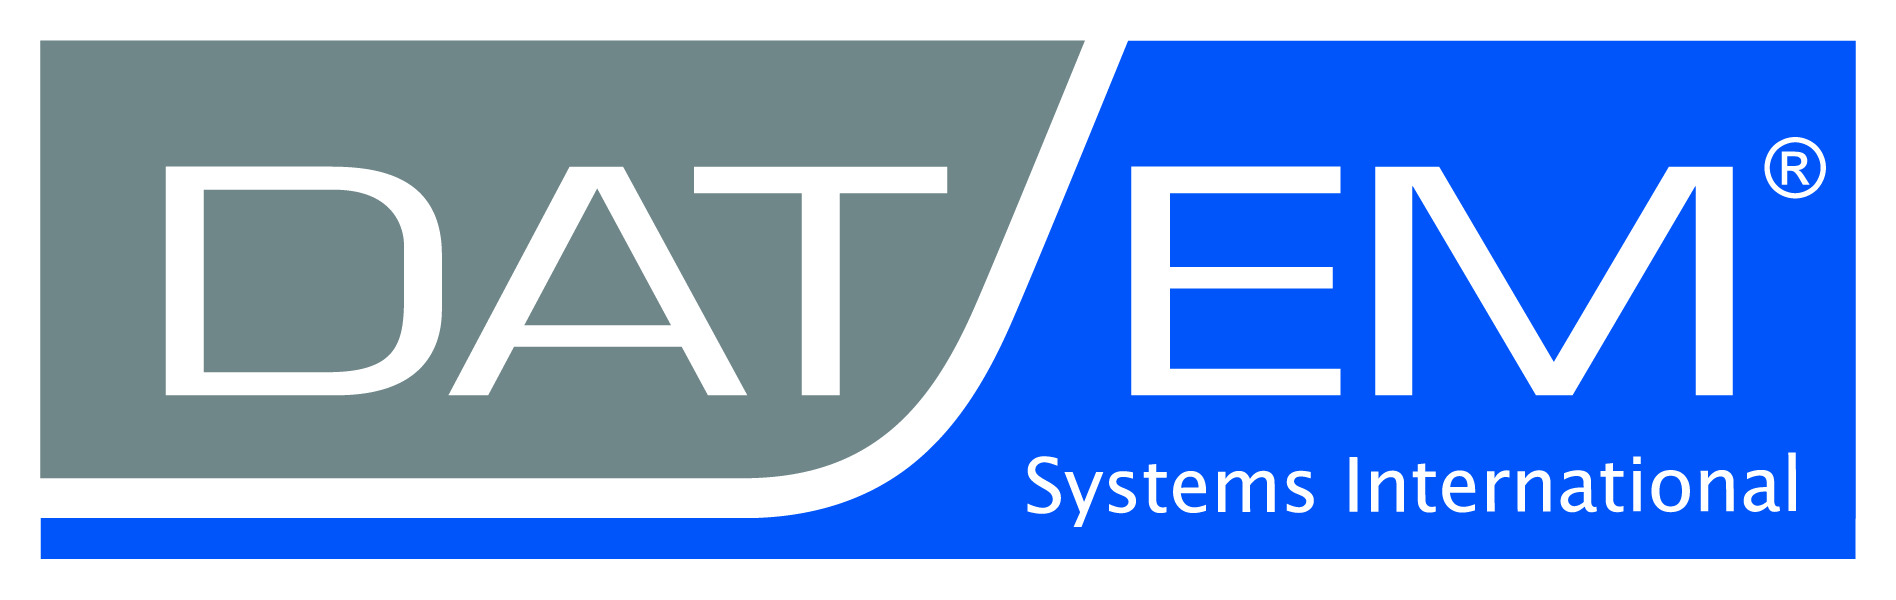 Camp Systems International Inc. лого. Woodfield Systems International лого. Лого IFAT International. Imex логотип.